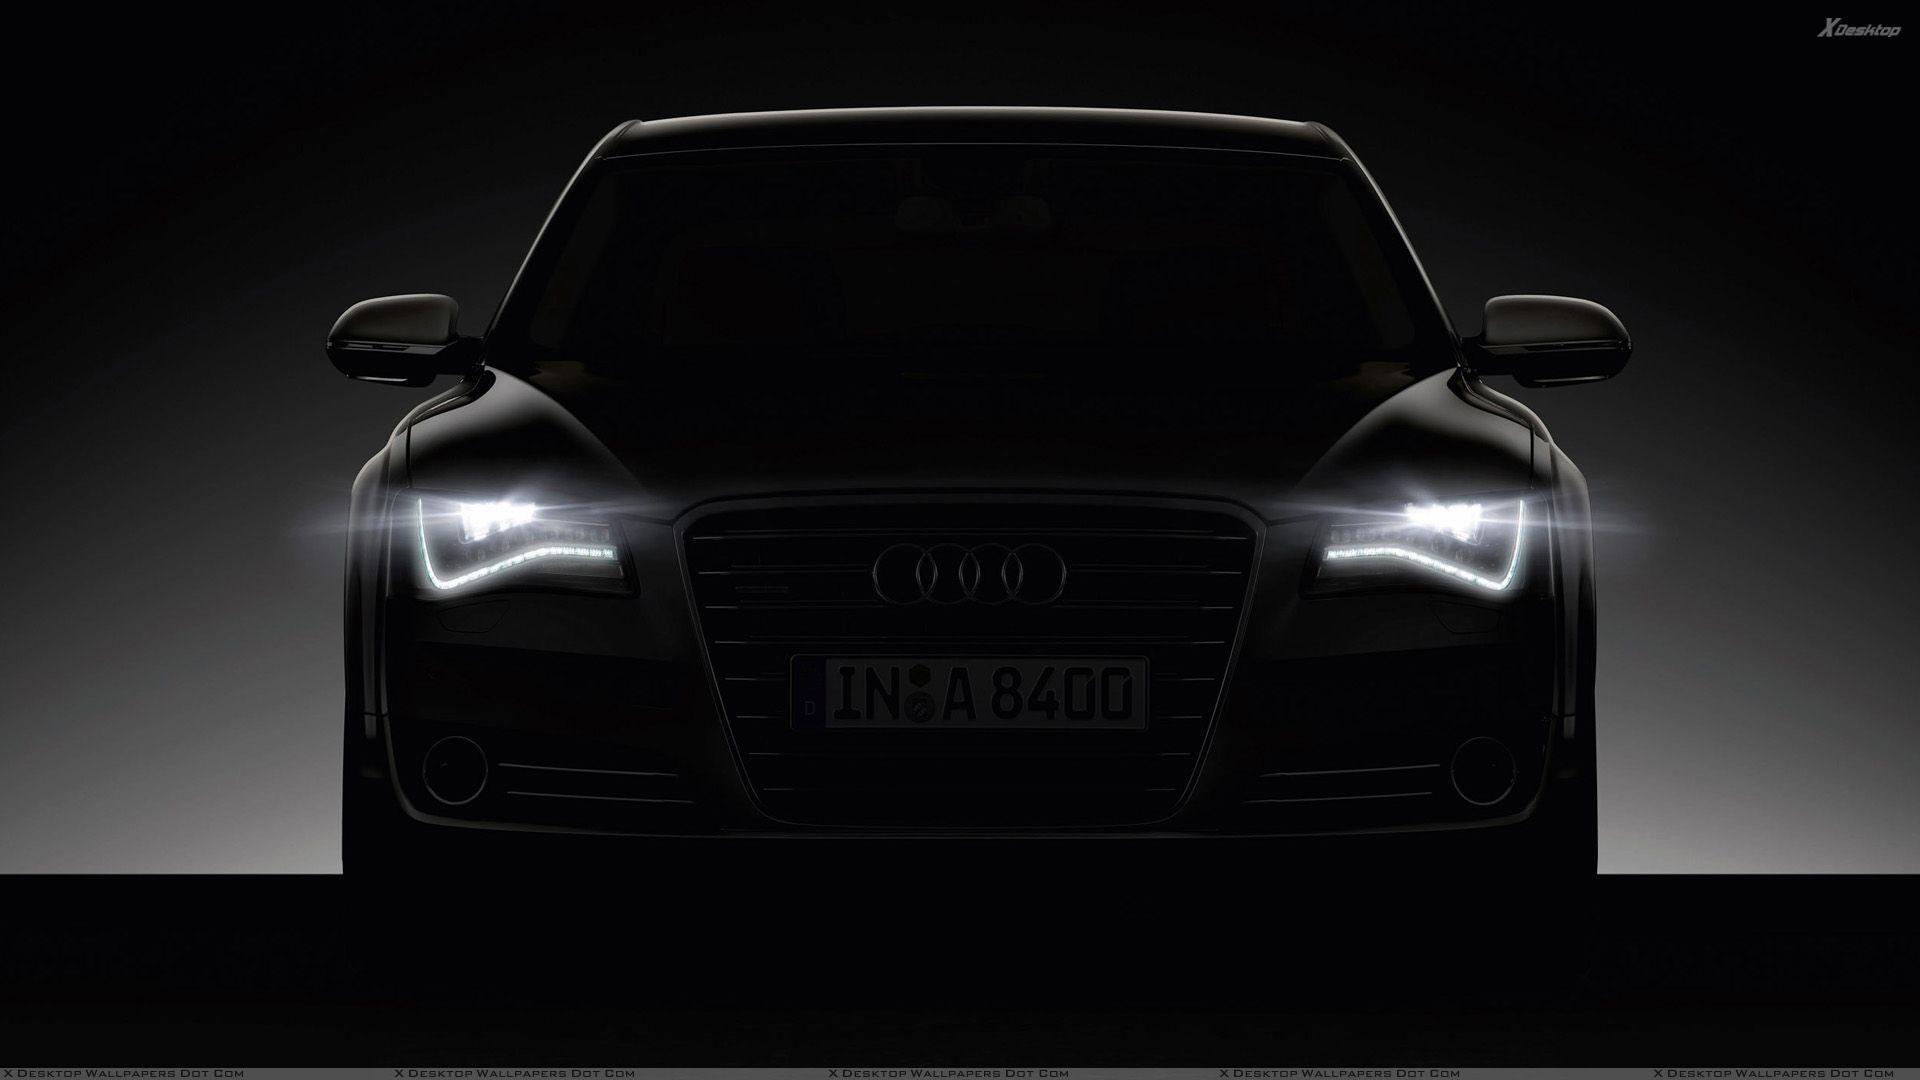 Audi A8 Wallpaper, Photo & Image in HD